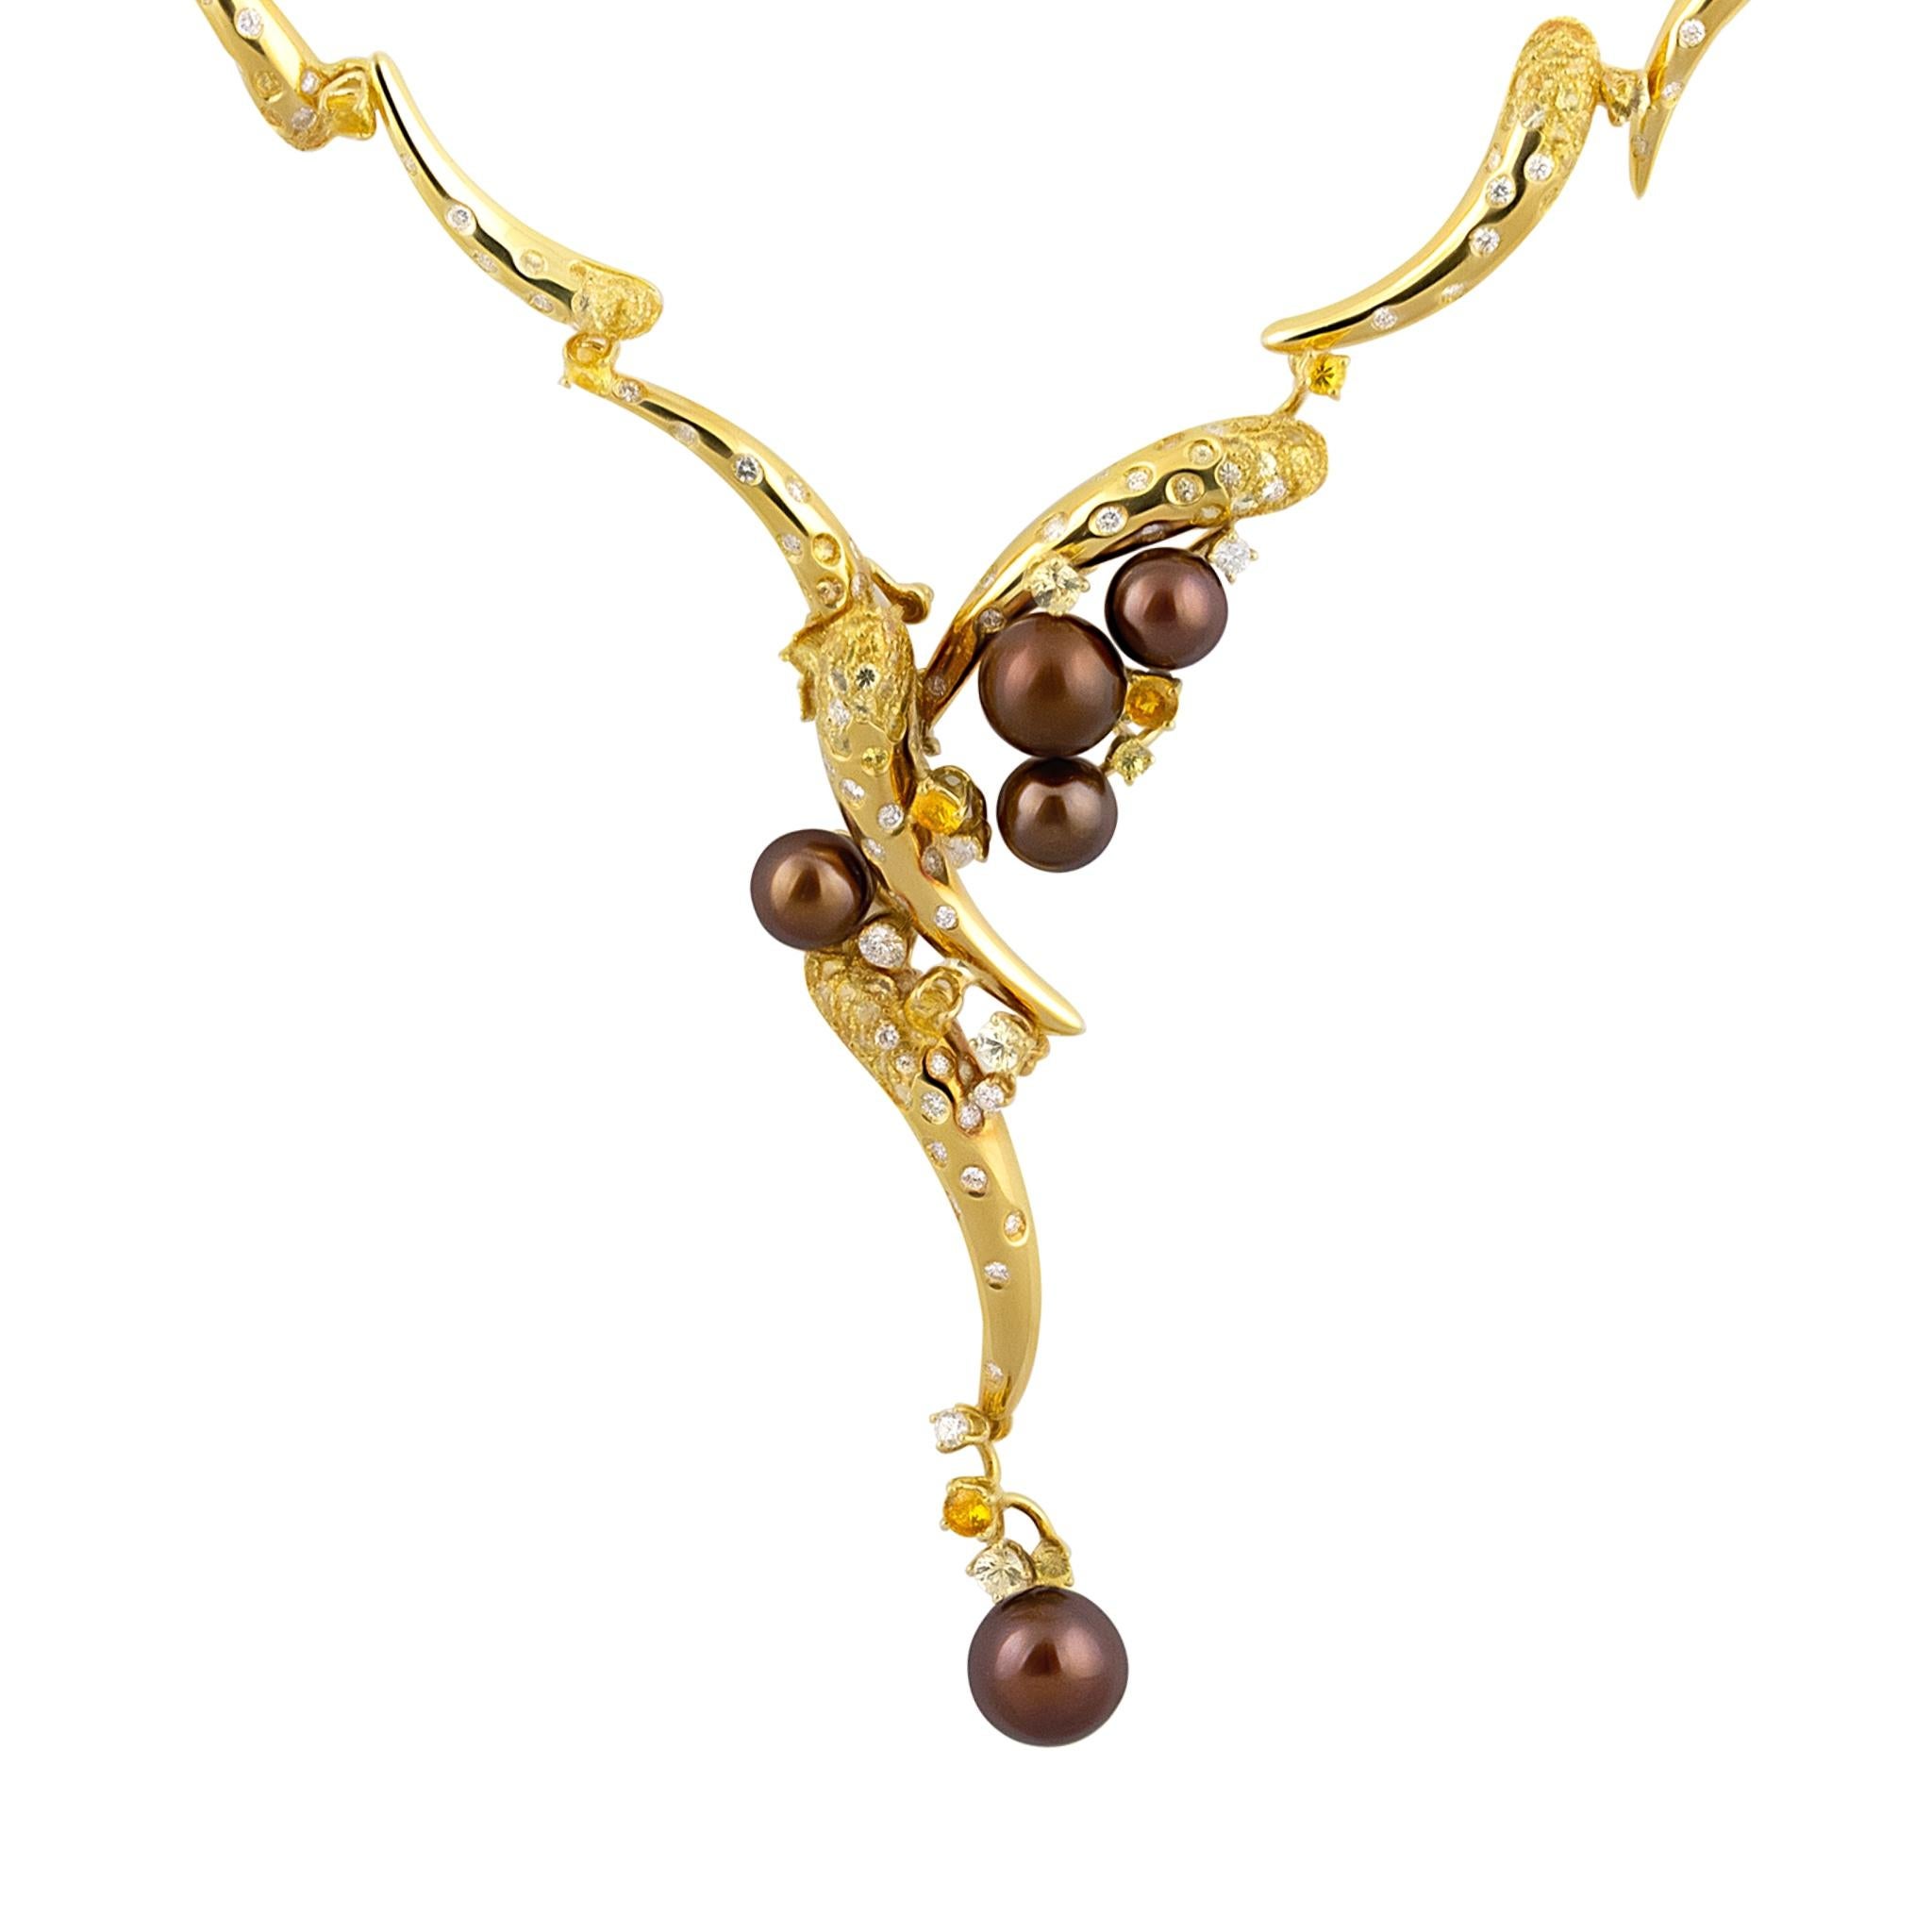 Stefan Hafner Pendant Necklace
18K Yellow Gold
Diamonds: 1.40ctw
Sapphire: 6.32ctw
Chocolate Pearls
Retail price: $37,070.00
SKU: BLU01917